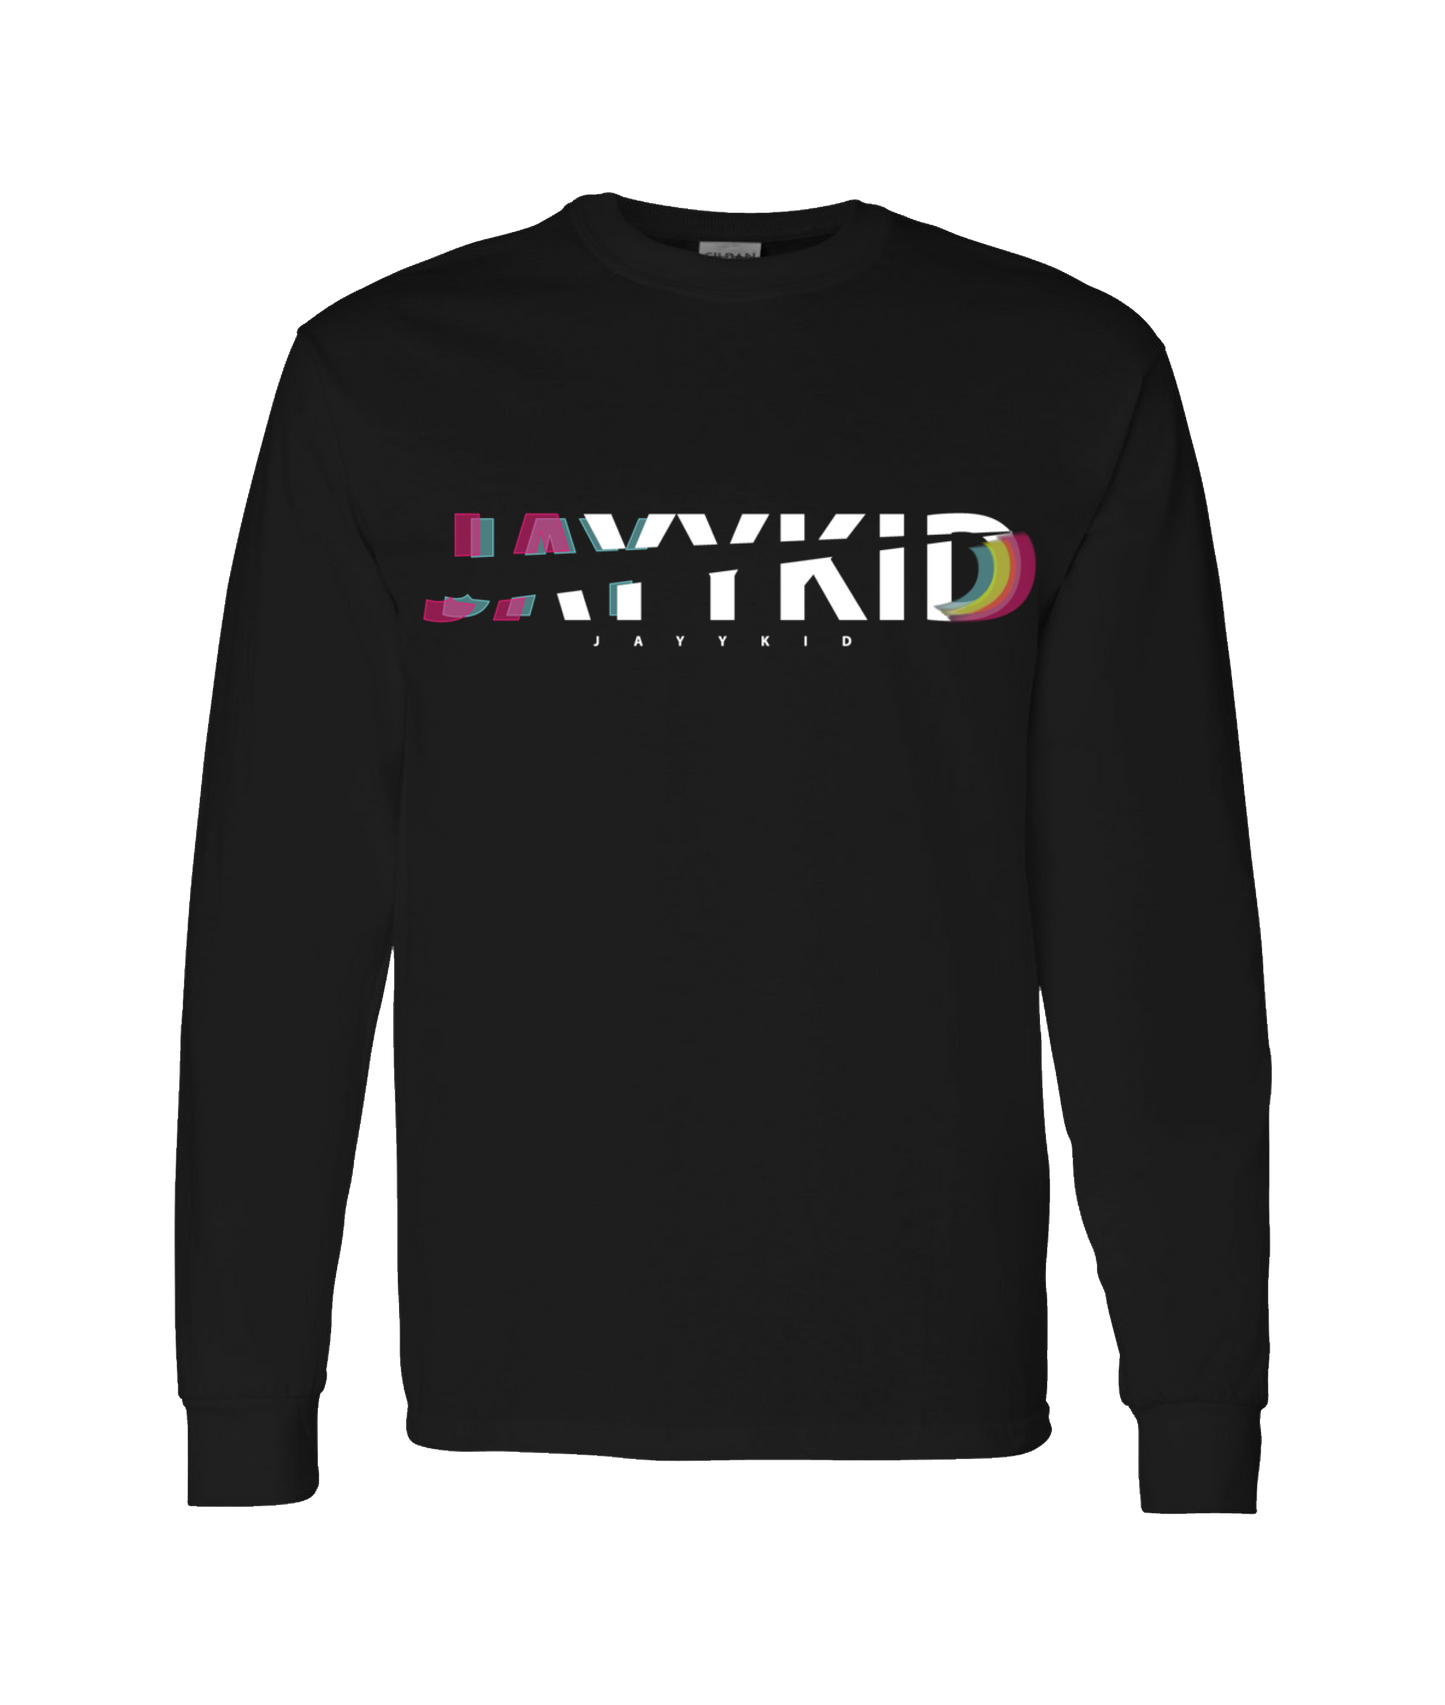 Jayy Kid - LOGO 3 - Black Long Sleeve T